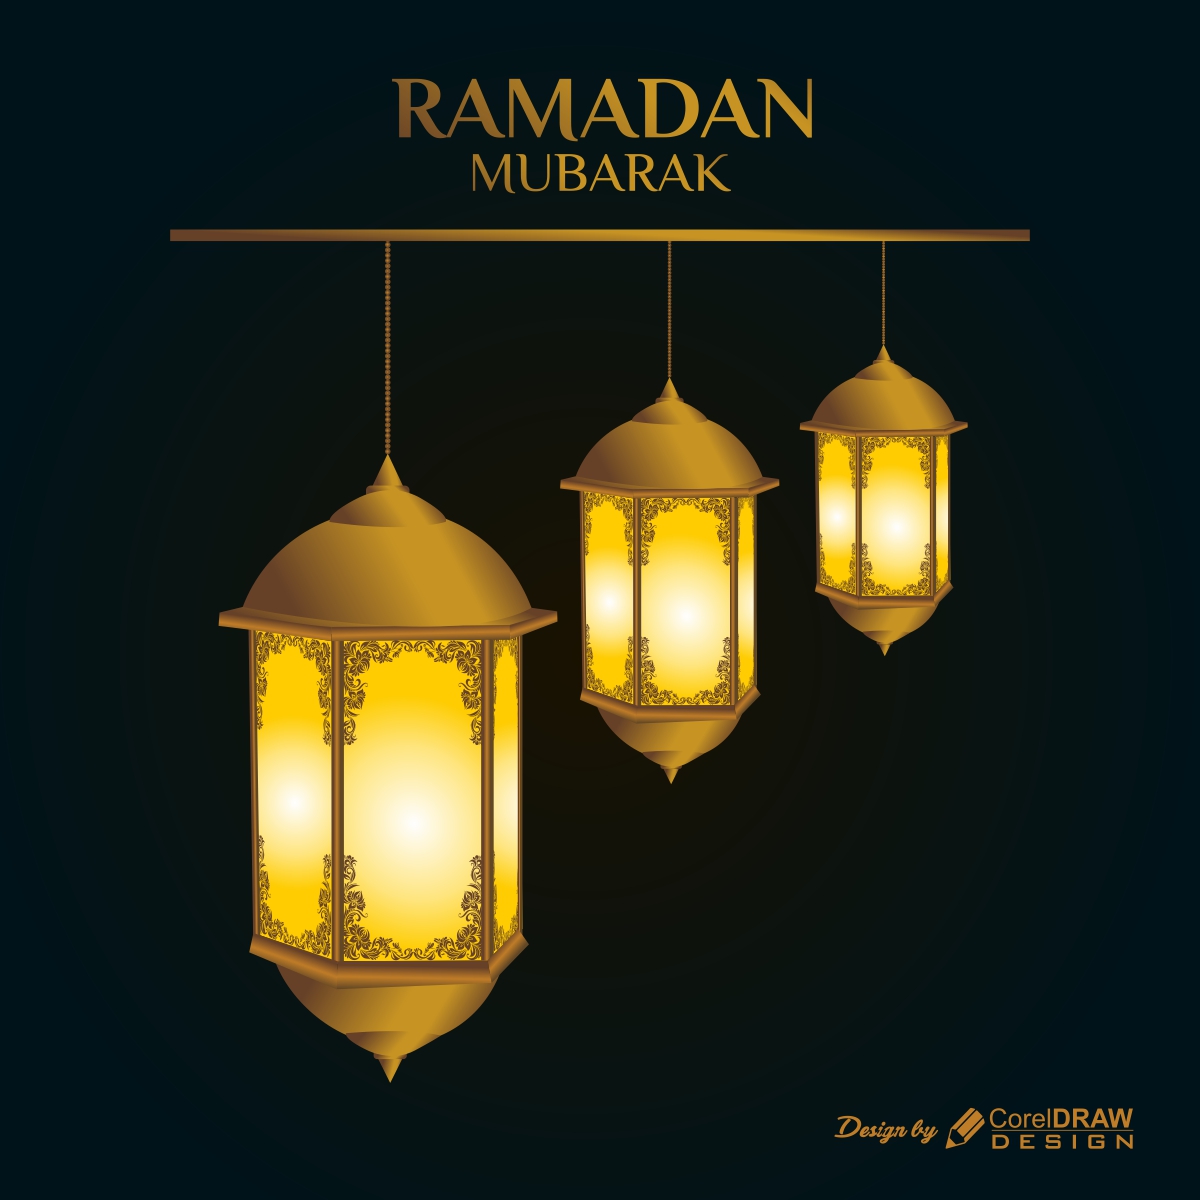 Golden Ramadan Mubarak Greeting Card with Lanterns